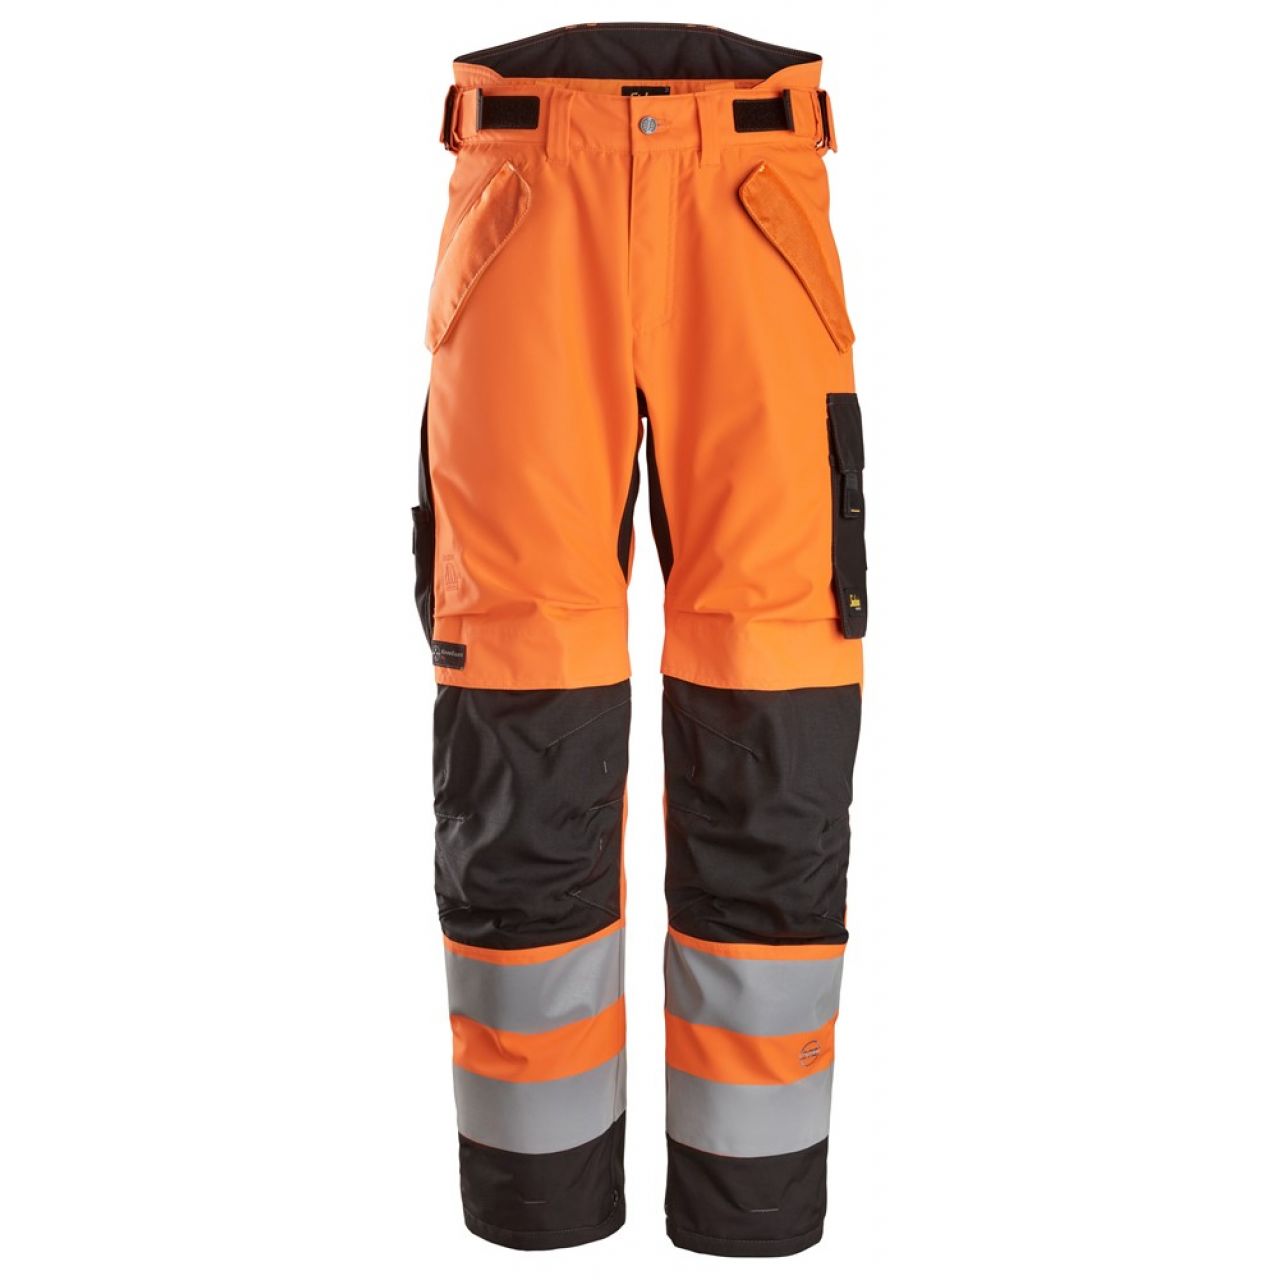 6630 Pantalones largos de trabajo impermeables de alta visibilidad clase 2 acolchados con doble capa 37.5® naranja-negro talla M